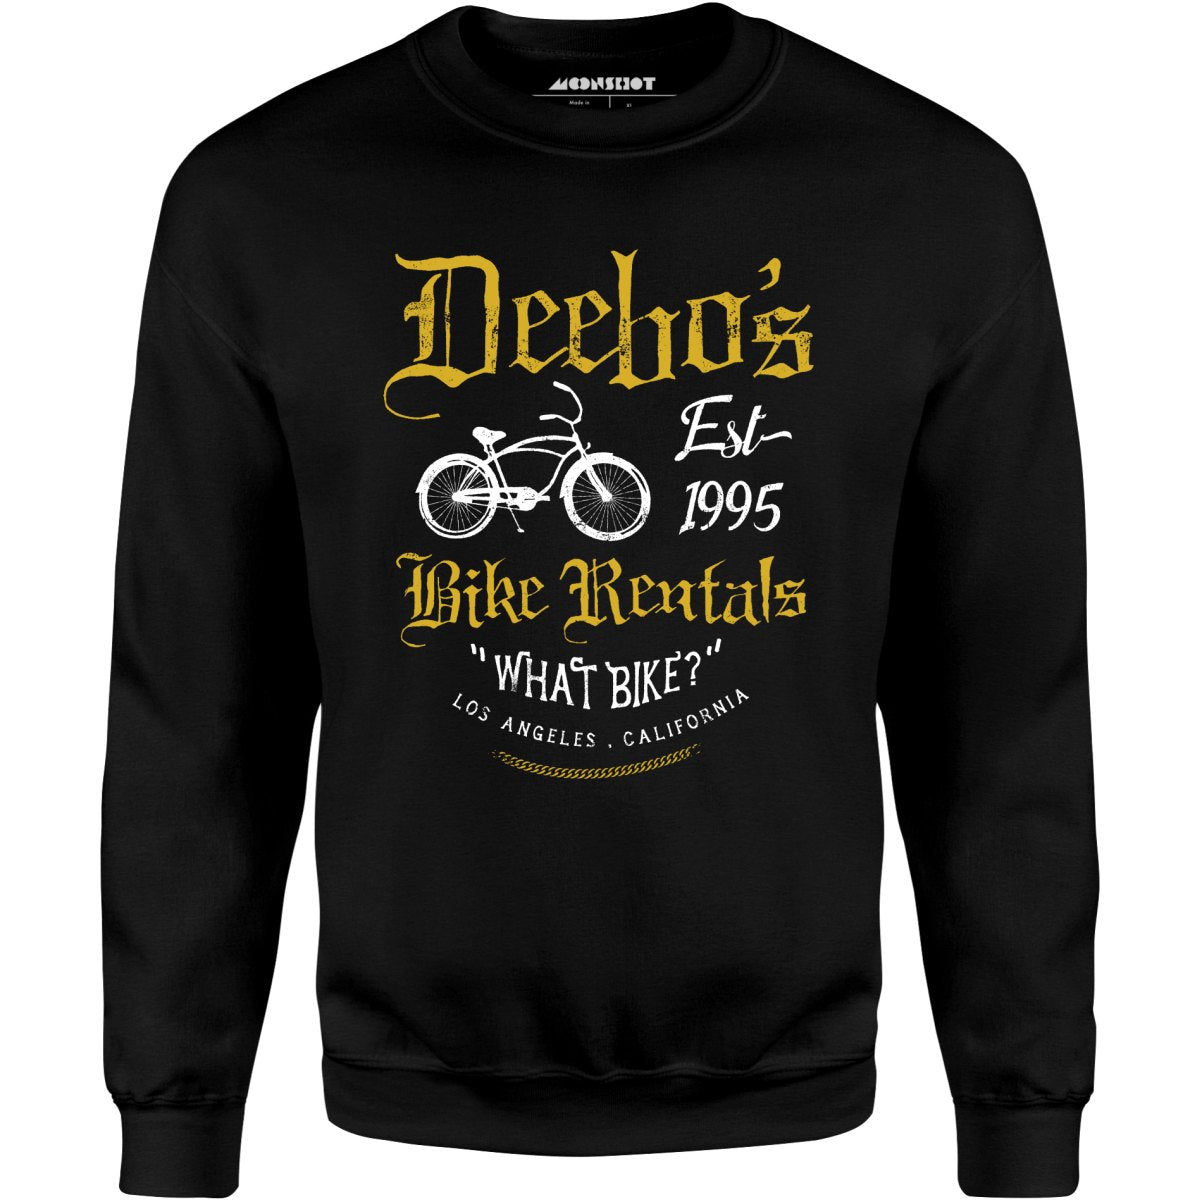 Deebo's Bike Rentals - Unisex Sweatshirt